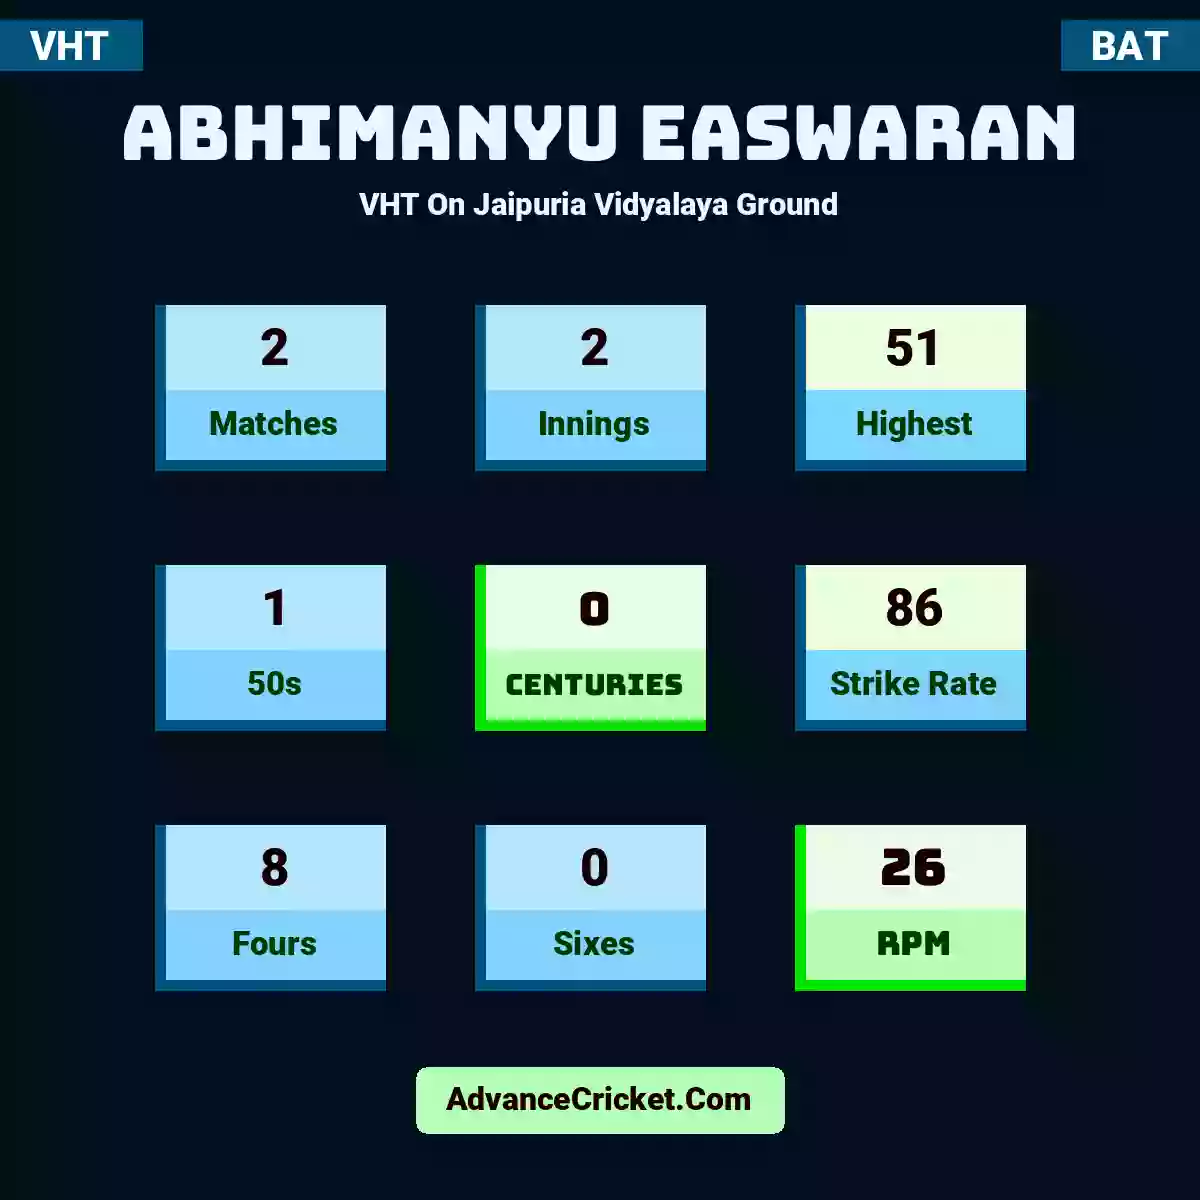 Abhimanyu Easwaran VHT  On Jaipuria Vidyalaya Ground, Abhimanyu Easwaran played 2 matches, scored 51 runs as highest, 1 half-centuries, and 0 centuries, with a strike rate of 86. A.Easwaran hit 8 fours and 0 sixes, with an RPM of 26.